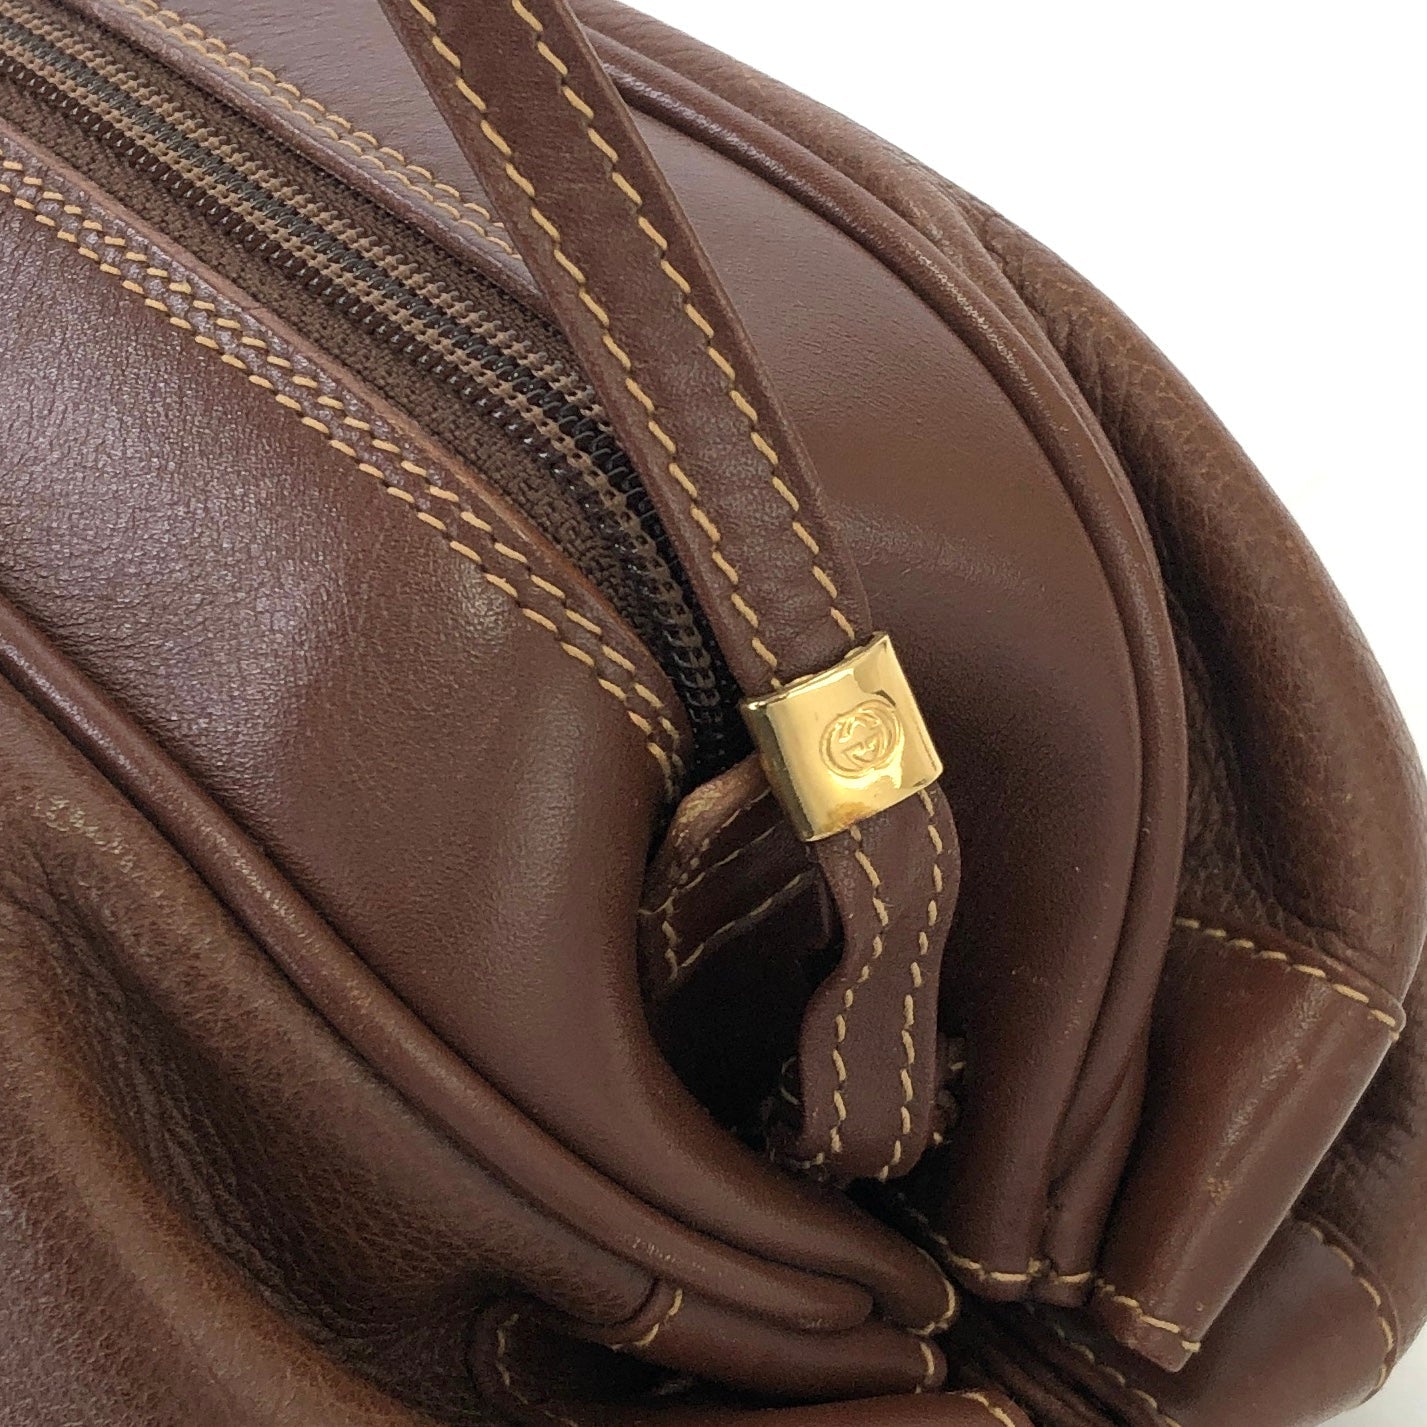 GUCCI GG logo Leather Round Crossbody Shoulder bag Brown Vintage Old Gucci i45utw